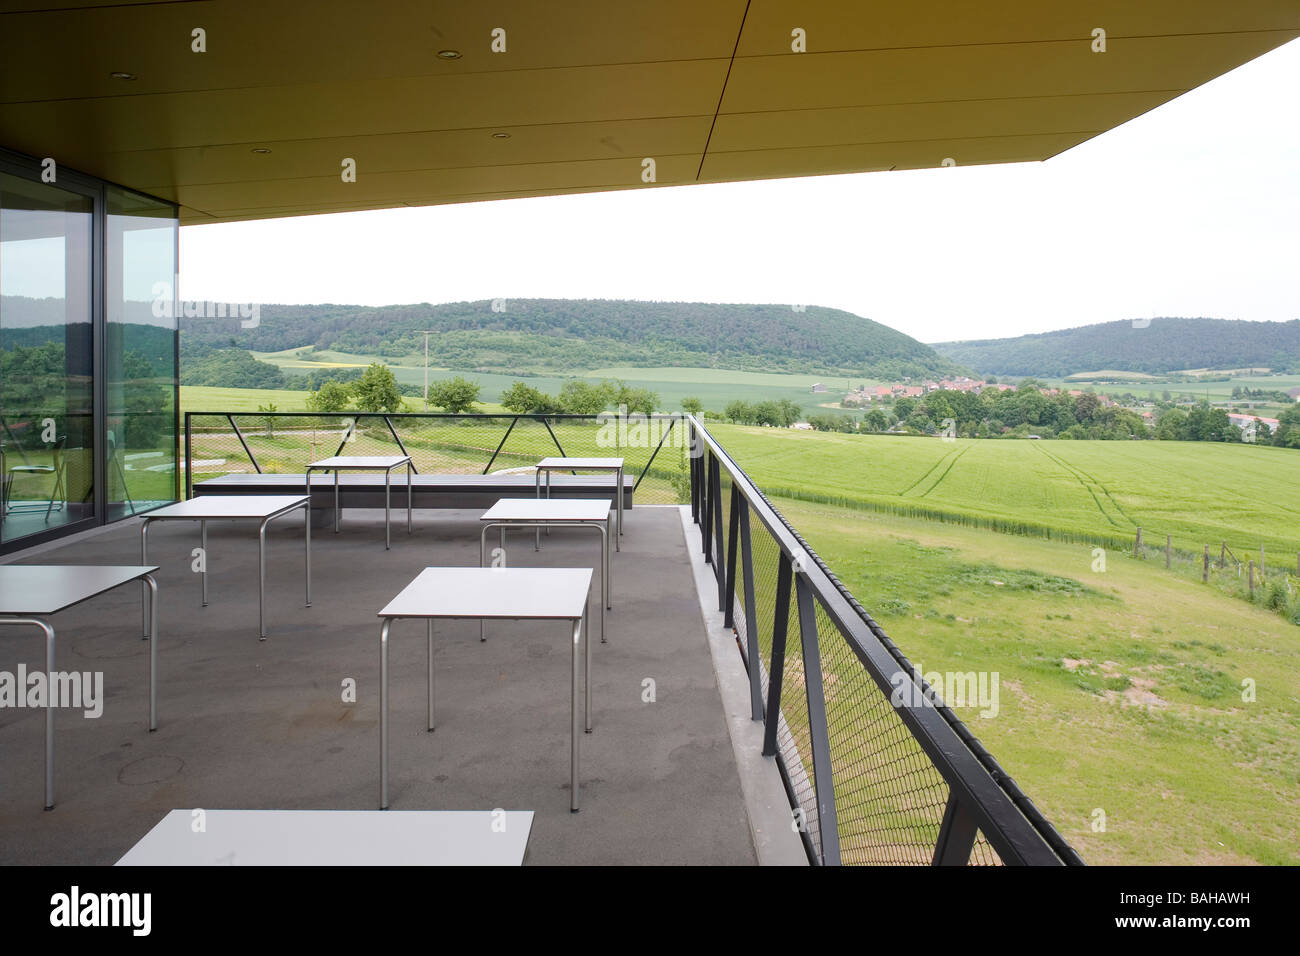 Arche Nebra, Wangen, Allemagne, Holzer Kobler Architekturen, arche Nebra terrasse de café. Banque D'Images